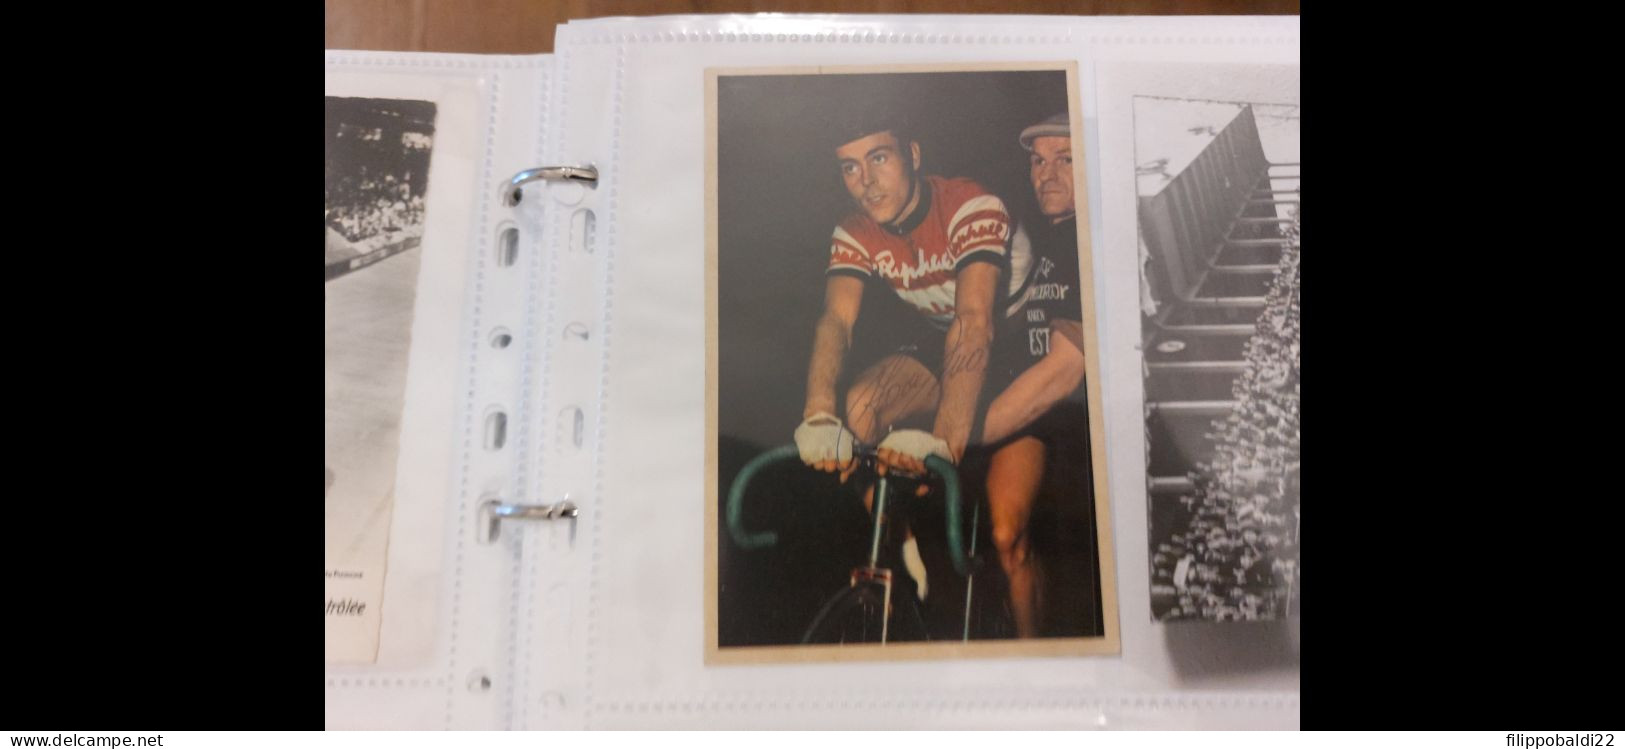 Jo De Roo 10x15 Autografo Autograph Signed - Cyclisme